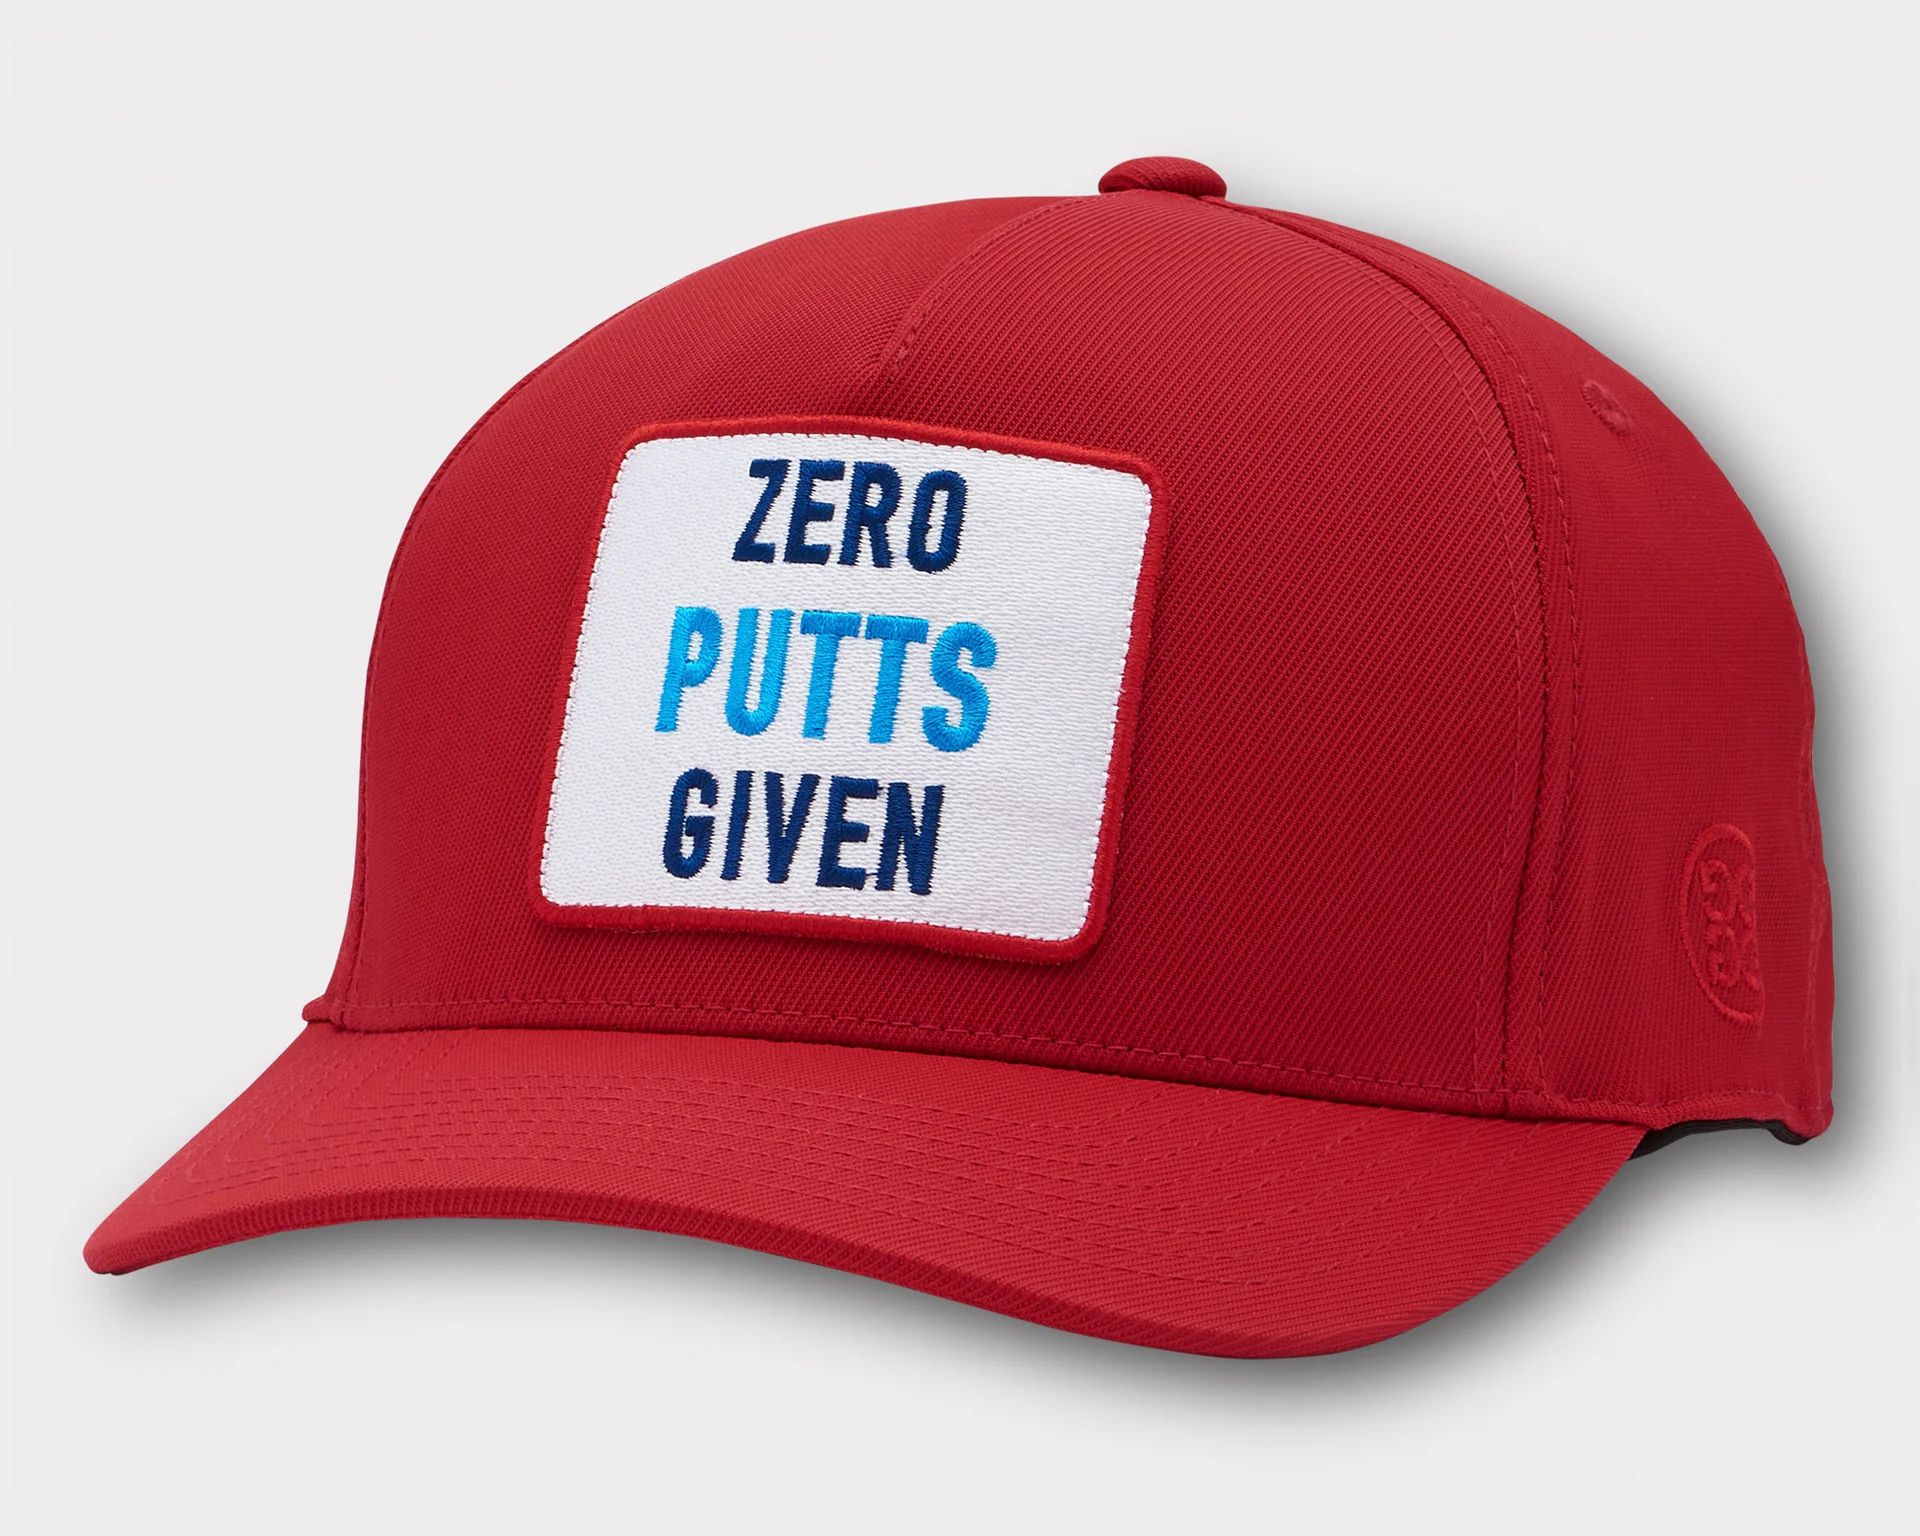 ZERO PUTTS GIVEN STRETCH TWILL SNAPBACK HAT | GFORE.com